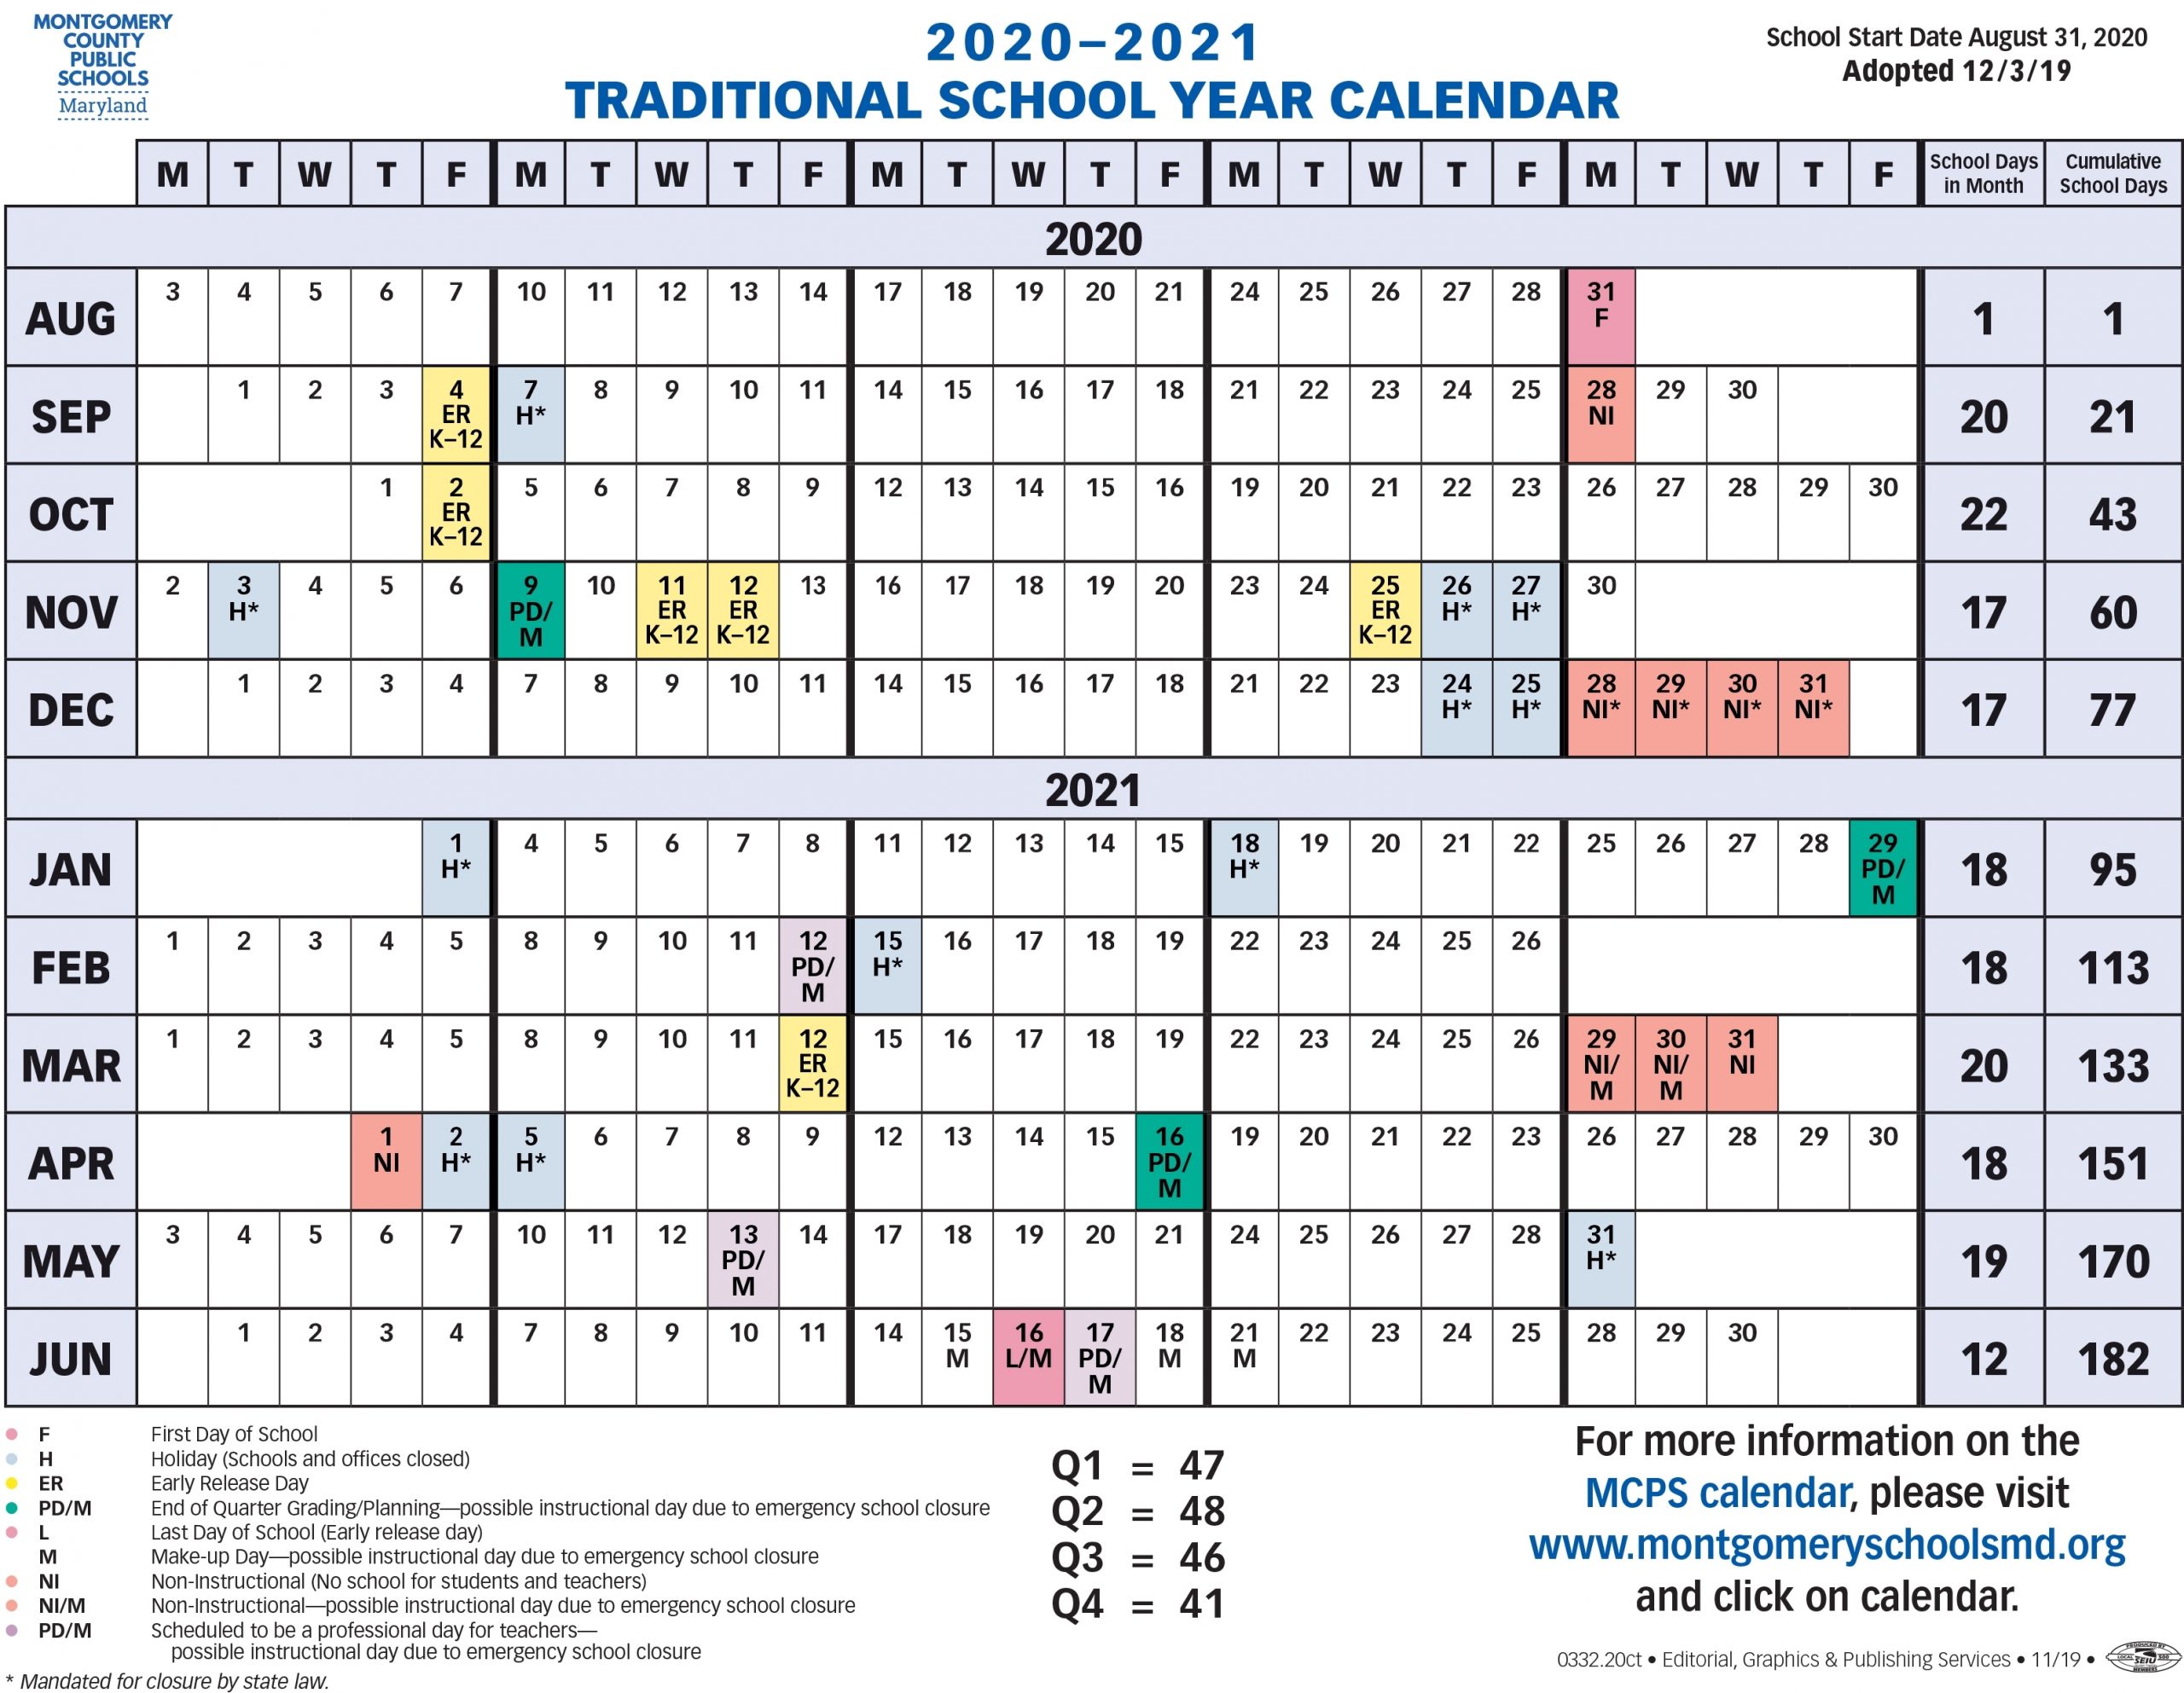 Proposed Calendar 2020-2021 - Montgomery County Public